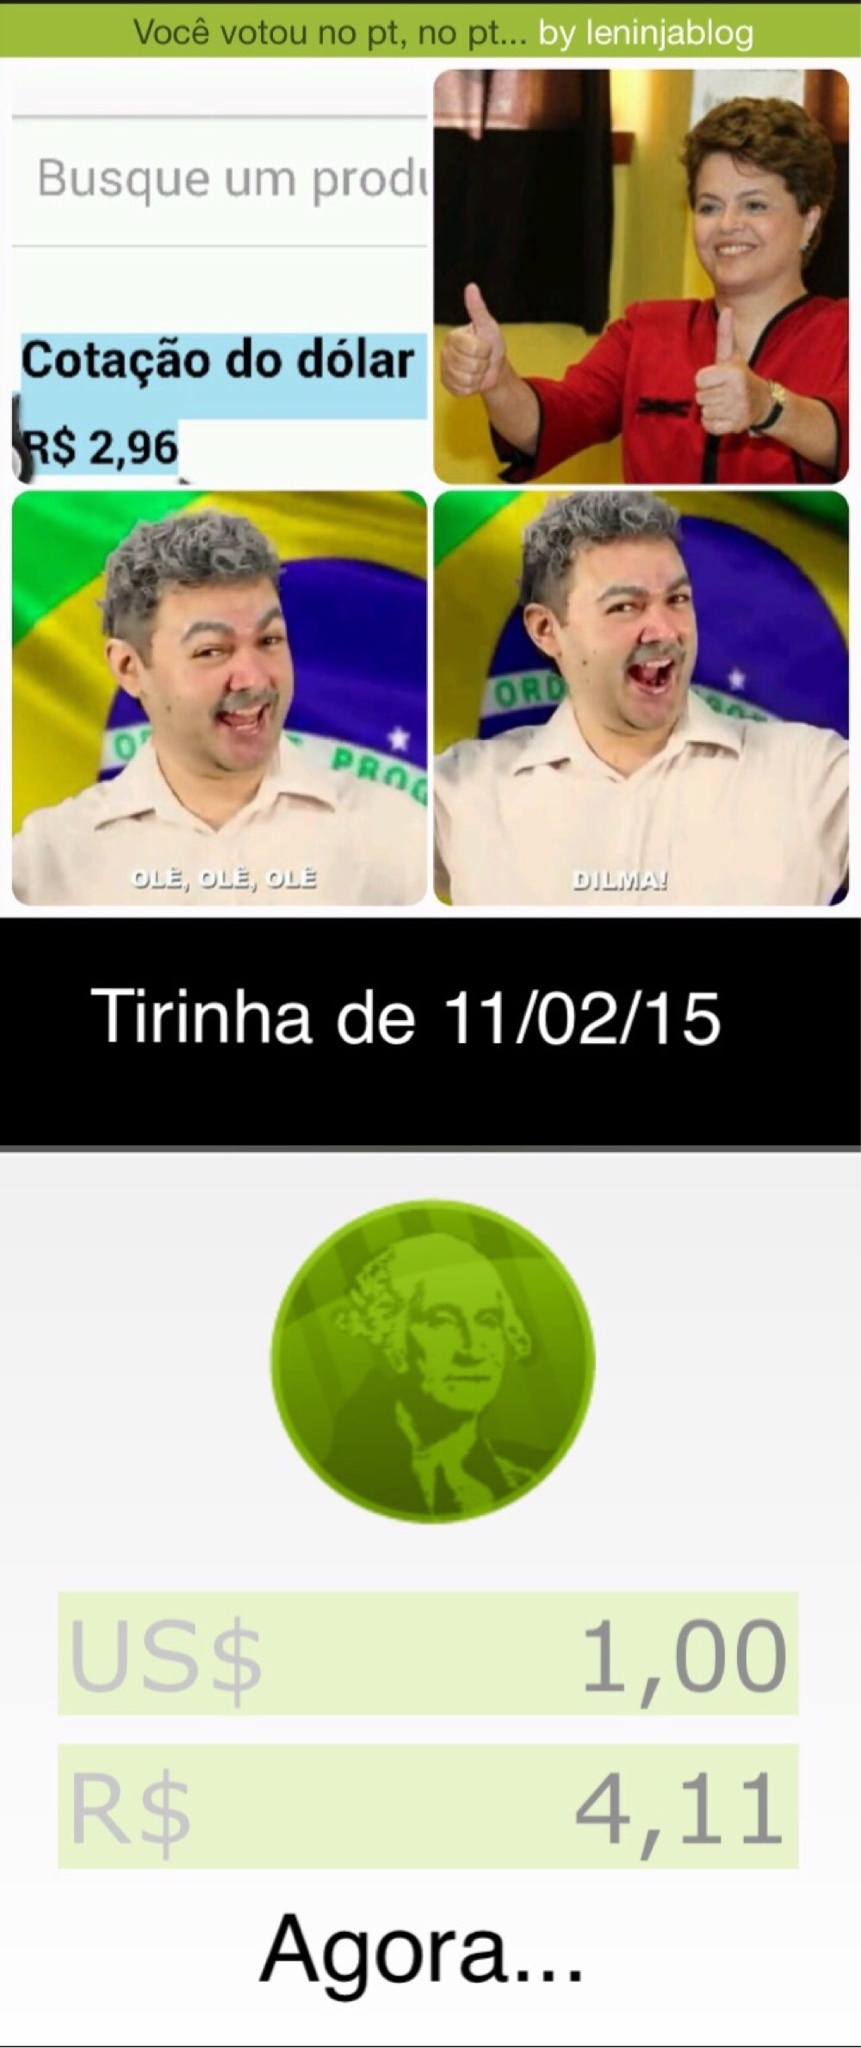 vlw Dilma! - meme